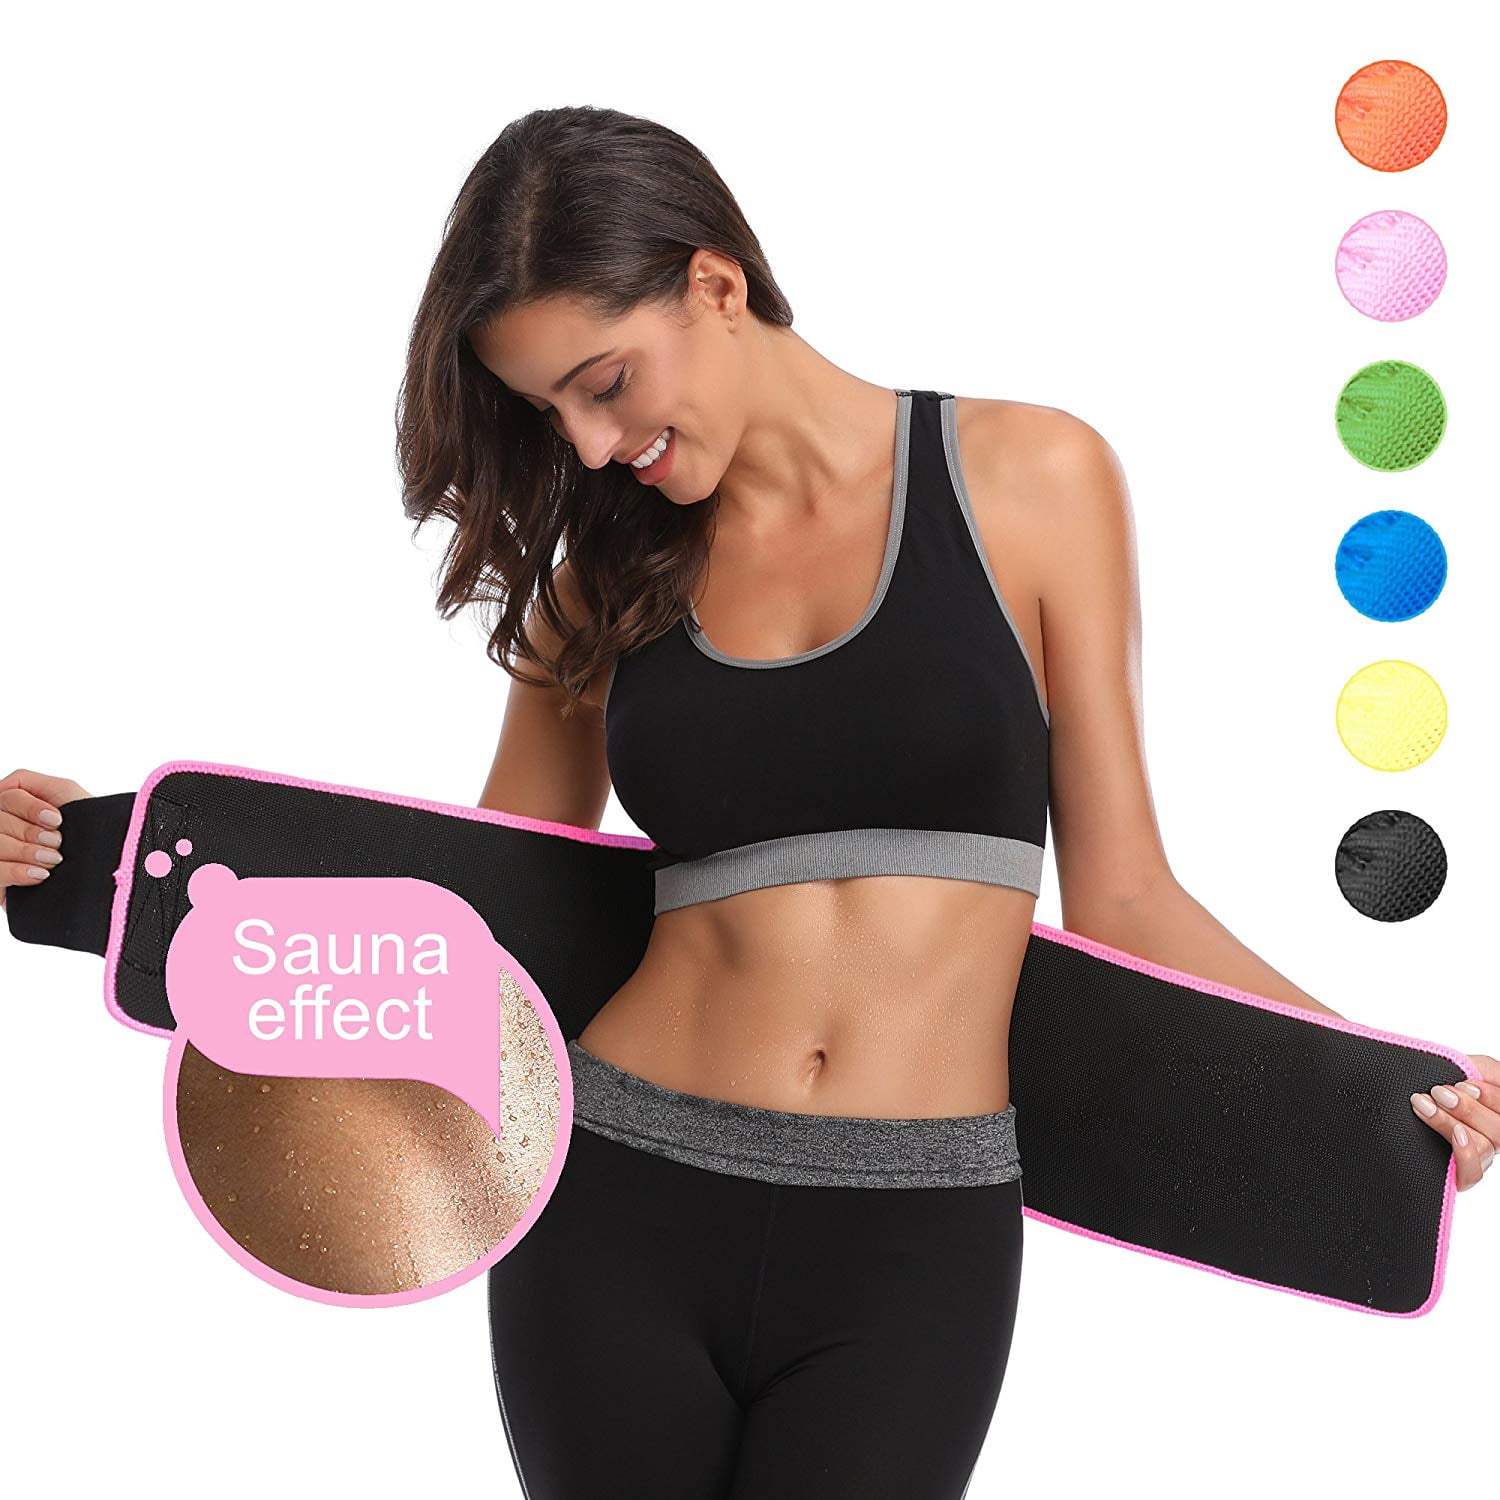 Workout Slimming Waist Trainer Belt for Women /& Men Waist Trimmer Sweat Band Neoprene Sports Girdle Belt for Weight Loss Body Shaper Lower Back /& Lumbar Support with Sauna Suit Effect